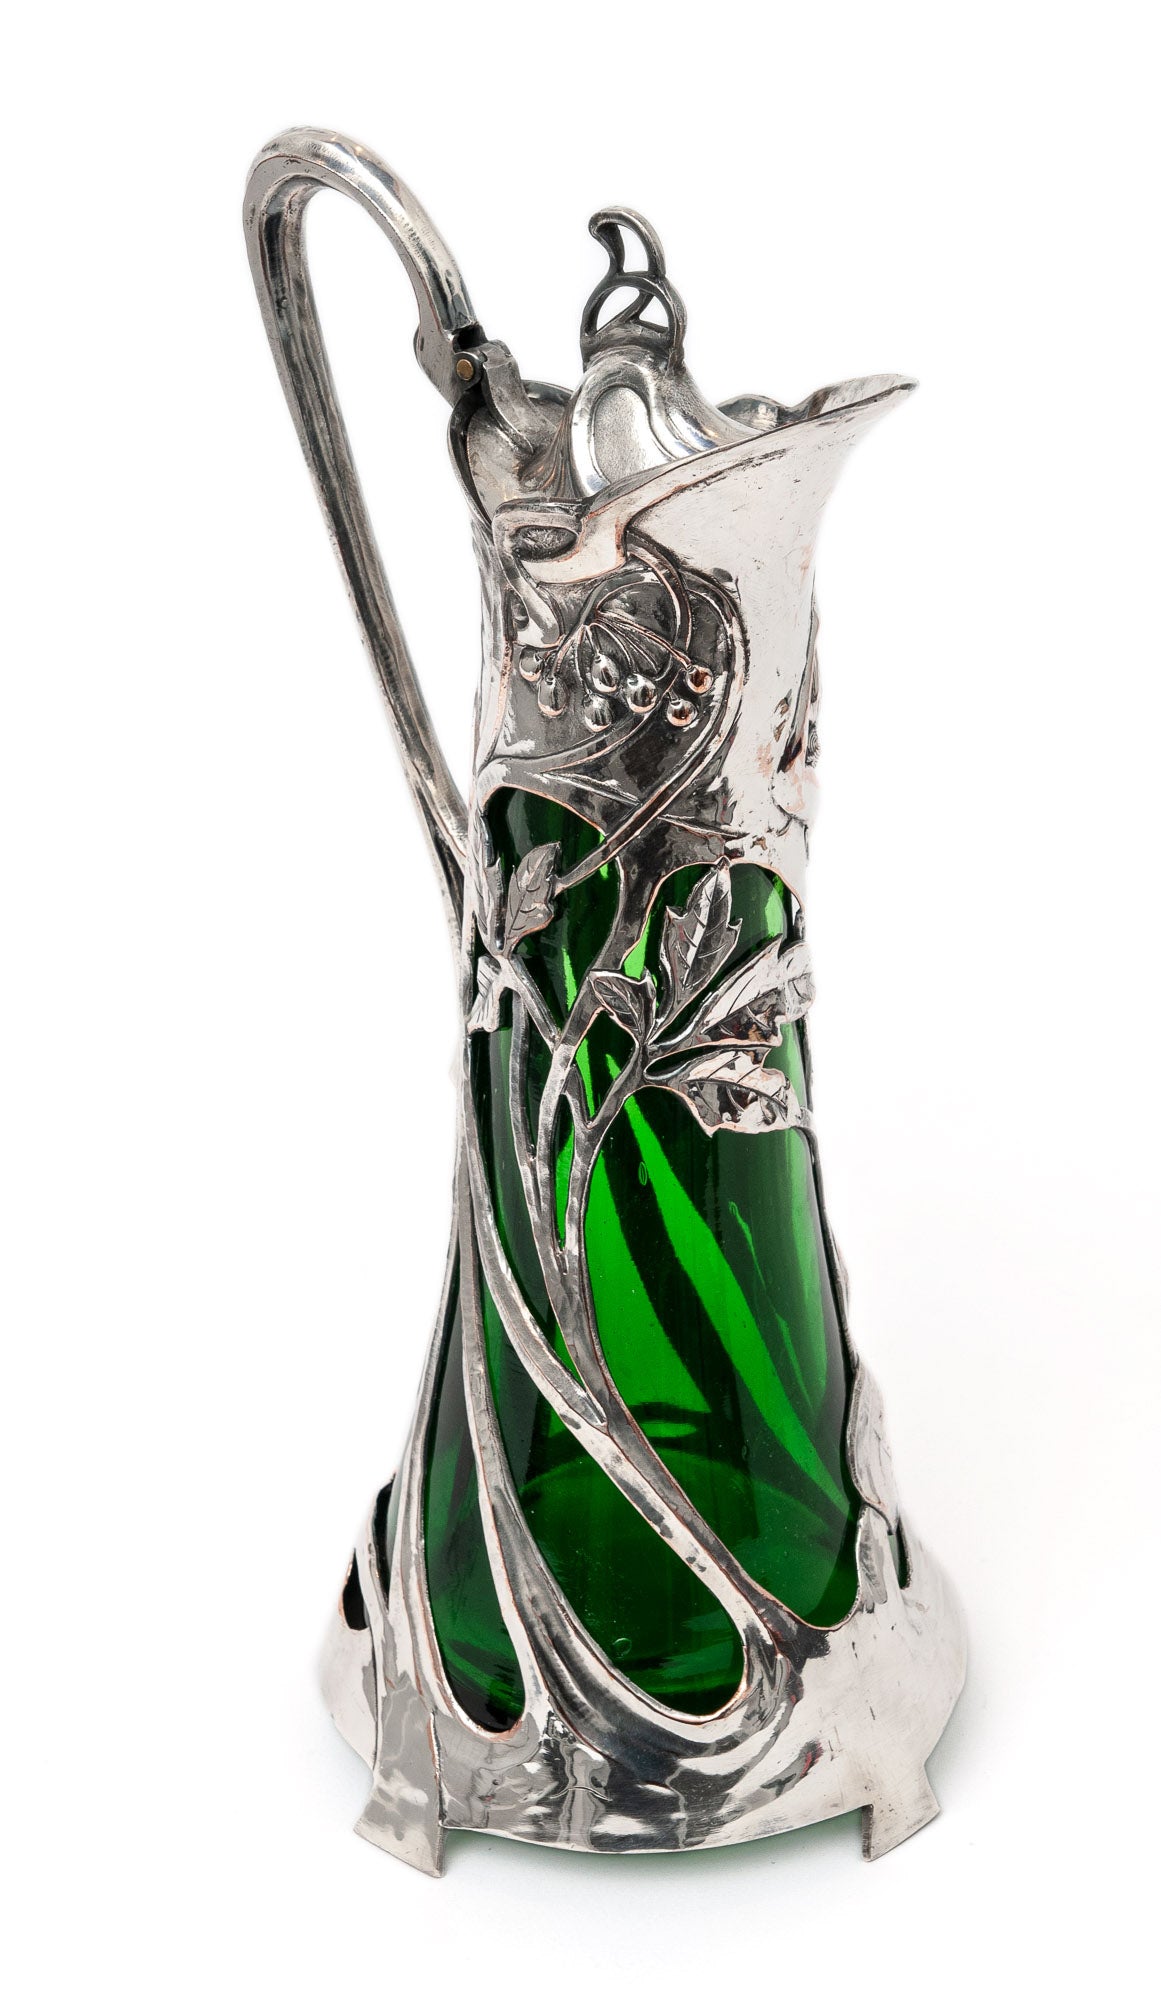 Antique Warszawa WMF Silver Plated Art Nouveau Large Green Glass Claret Jug (Code 1444)